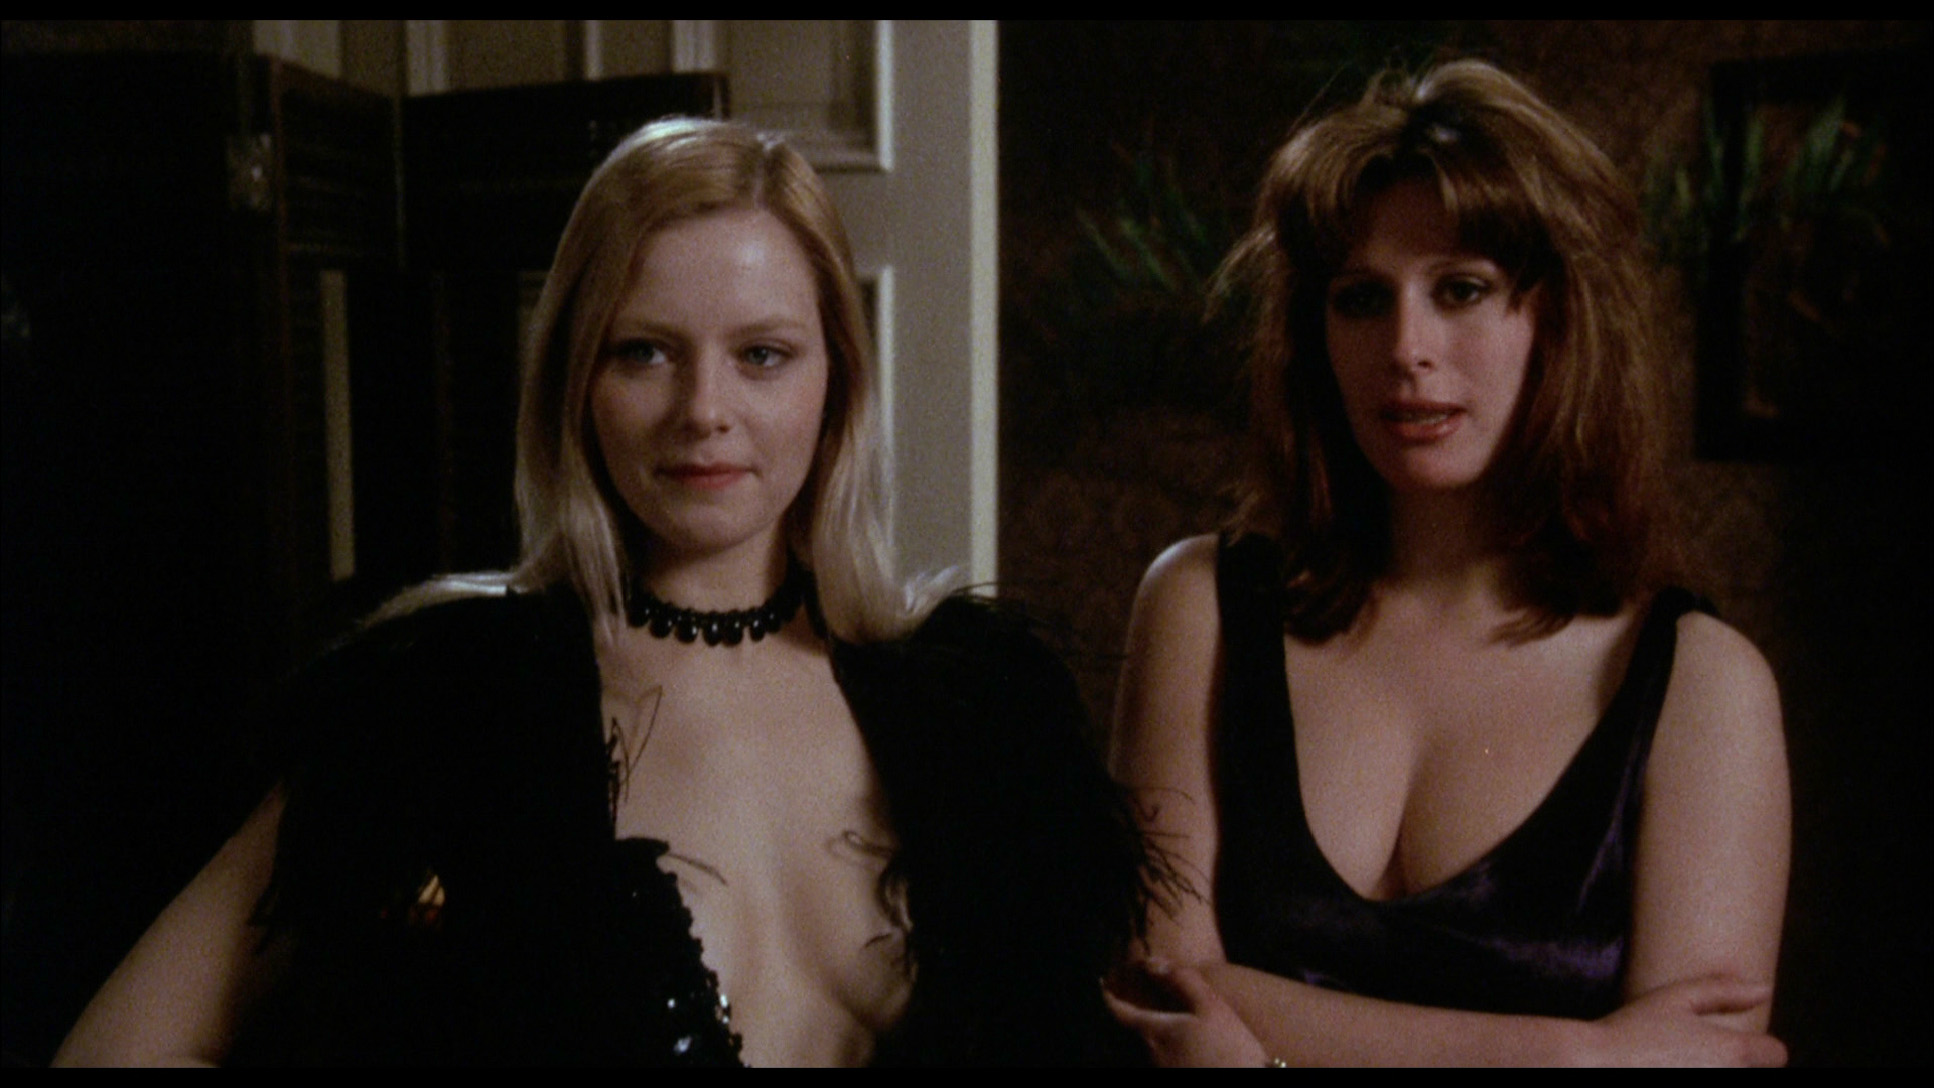 Naked Lesbian Vampire Movie - Top 10 Erotic Horror Films â€“ Wrong Reel Productions